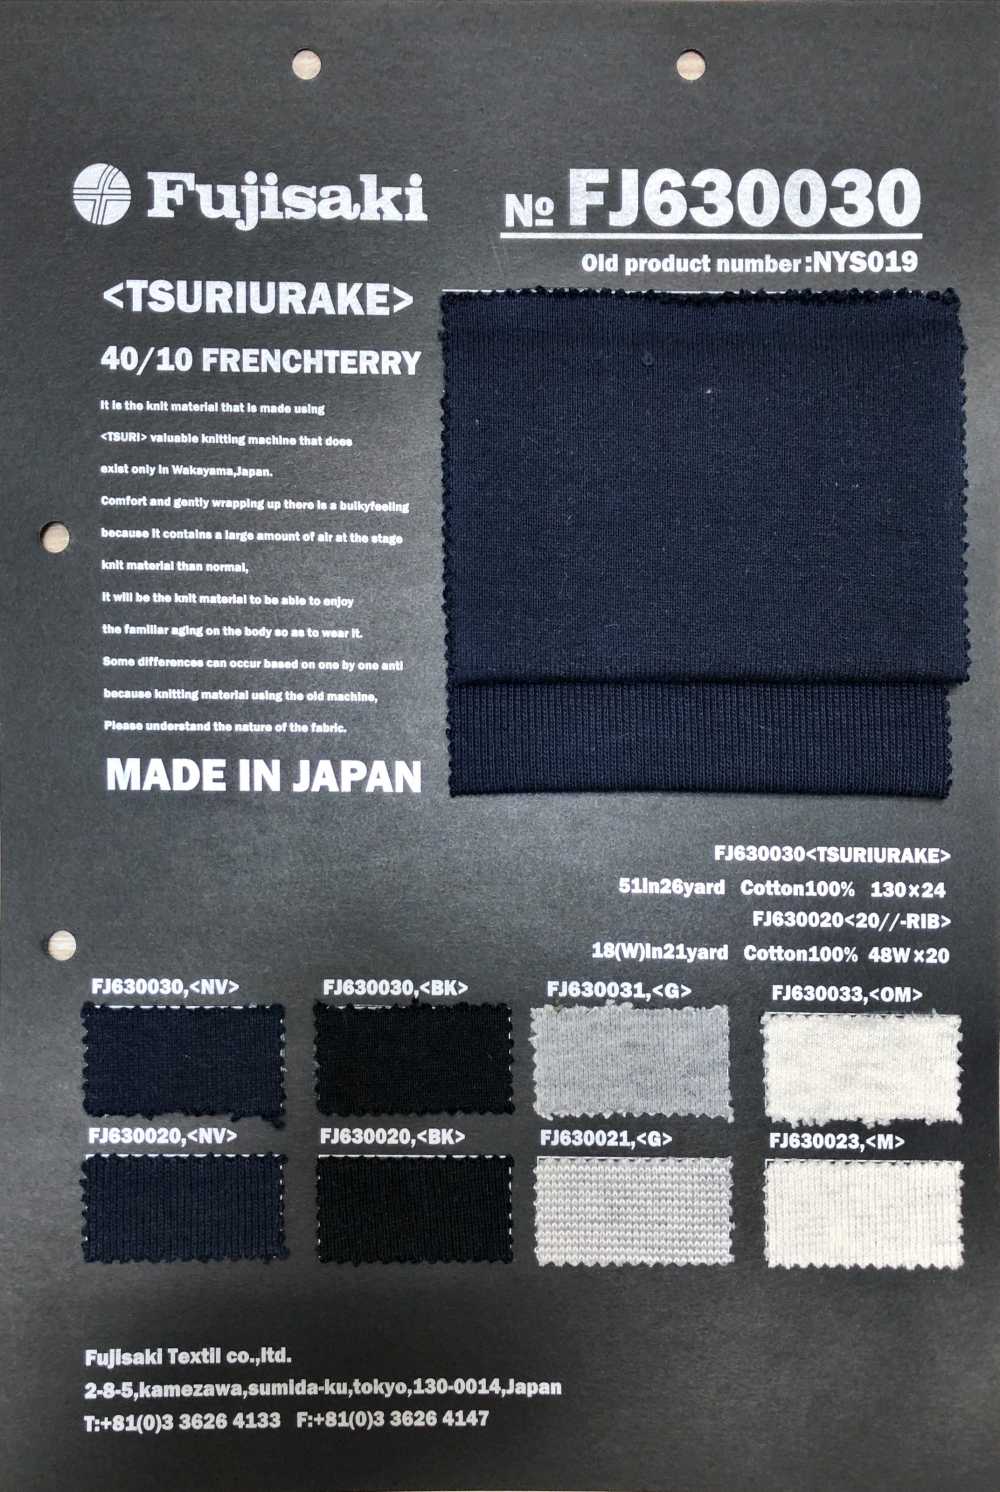 FJ630020 20//- Rippstrick[Textilgewebe] Fujisaki Textile